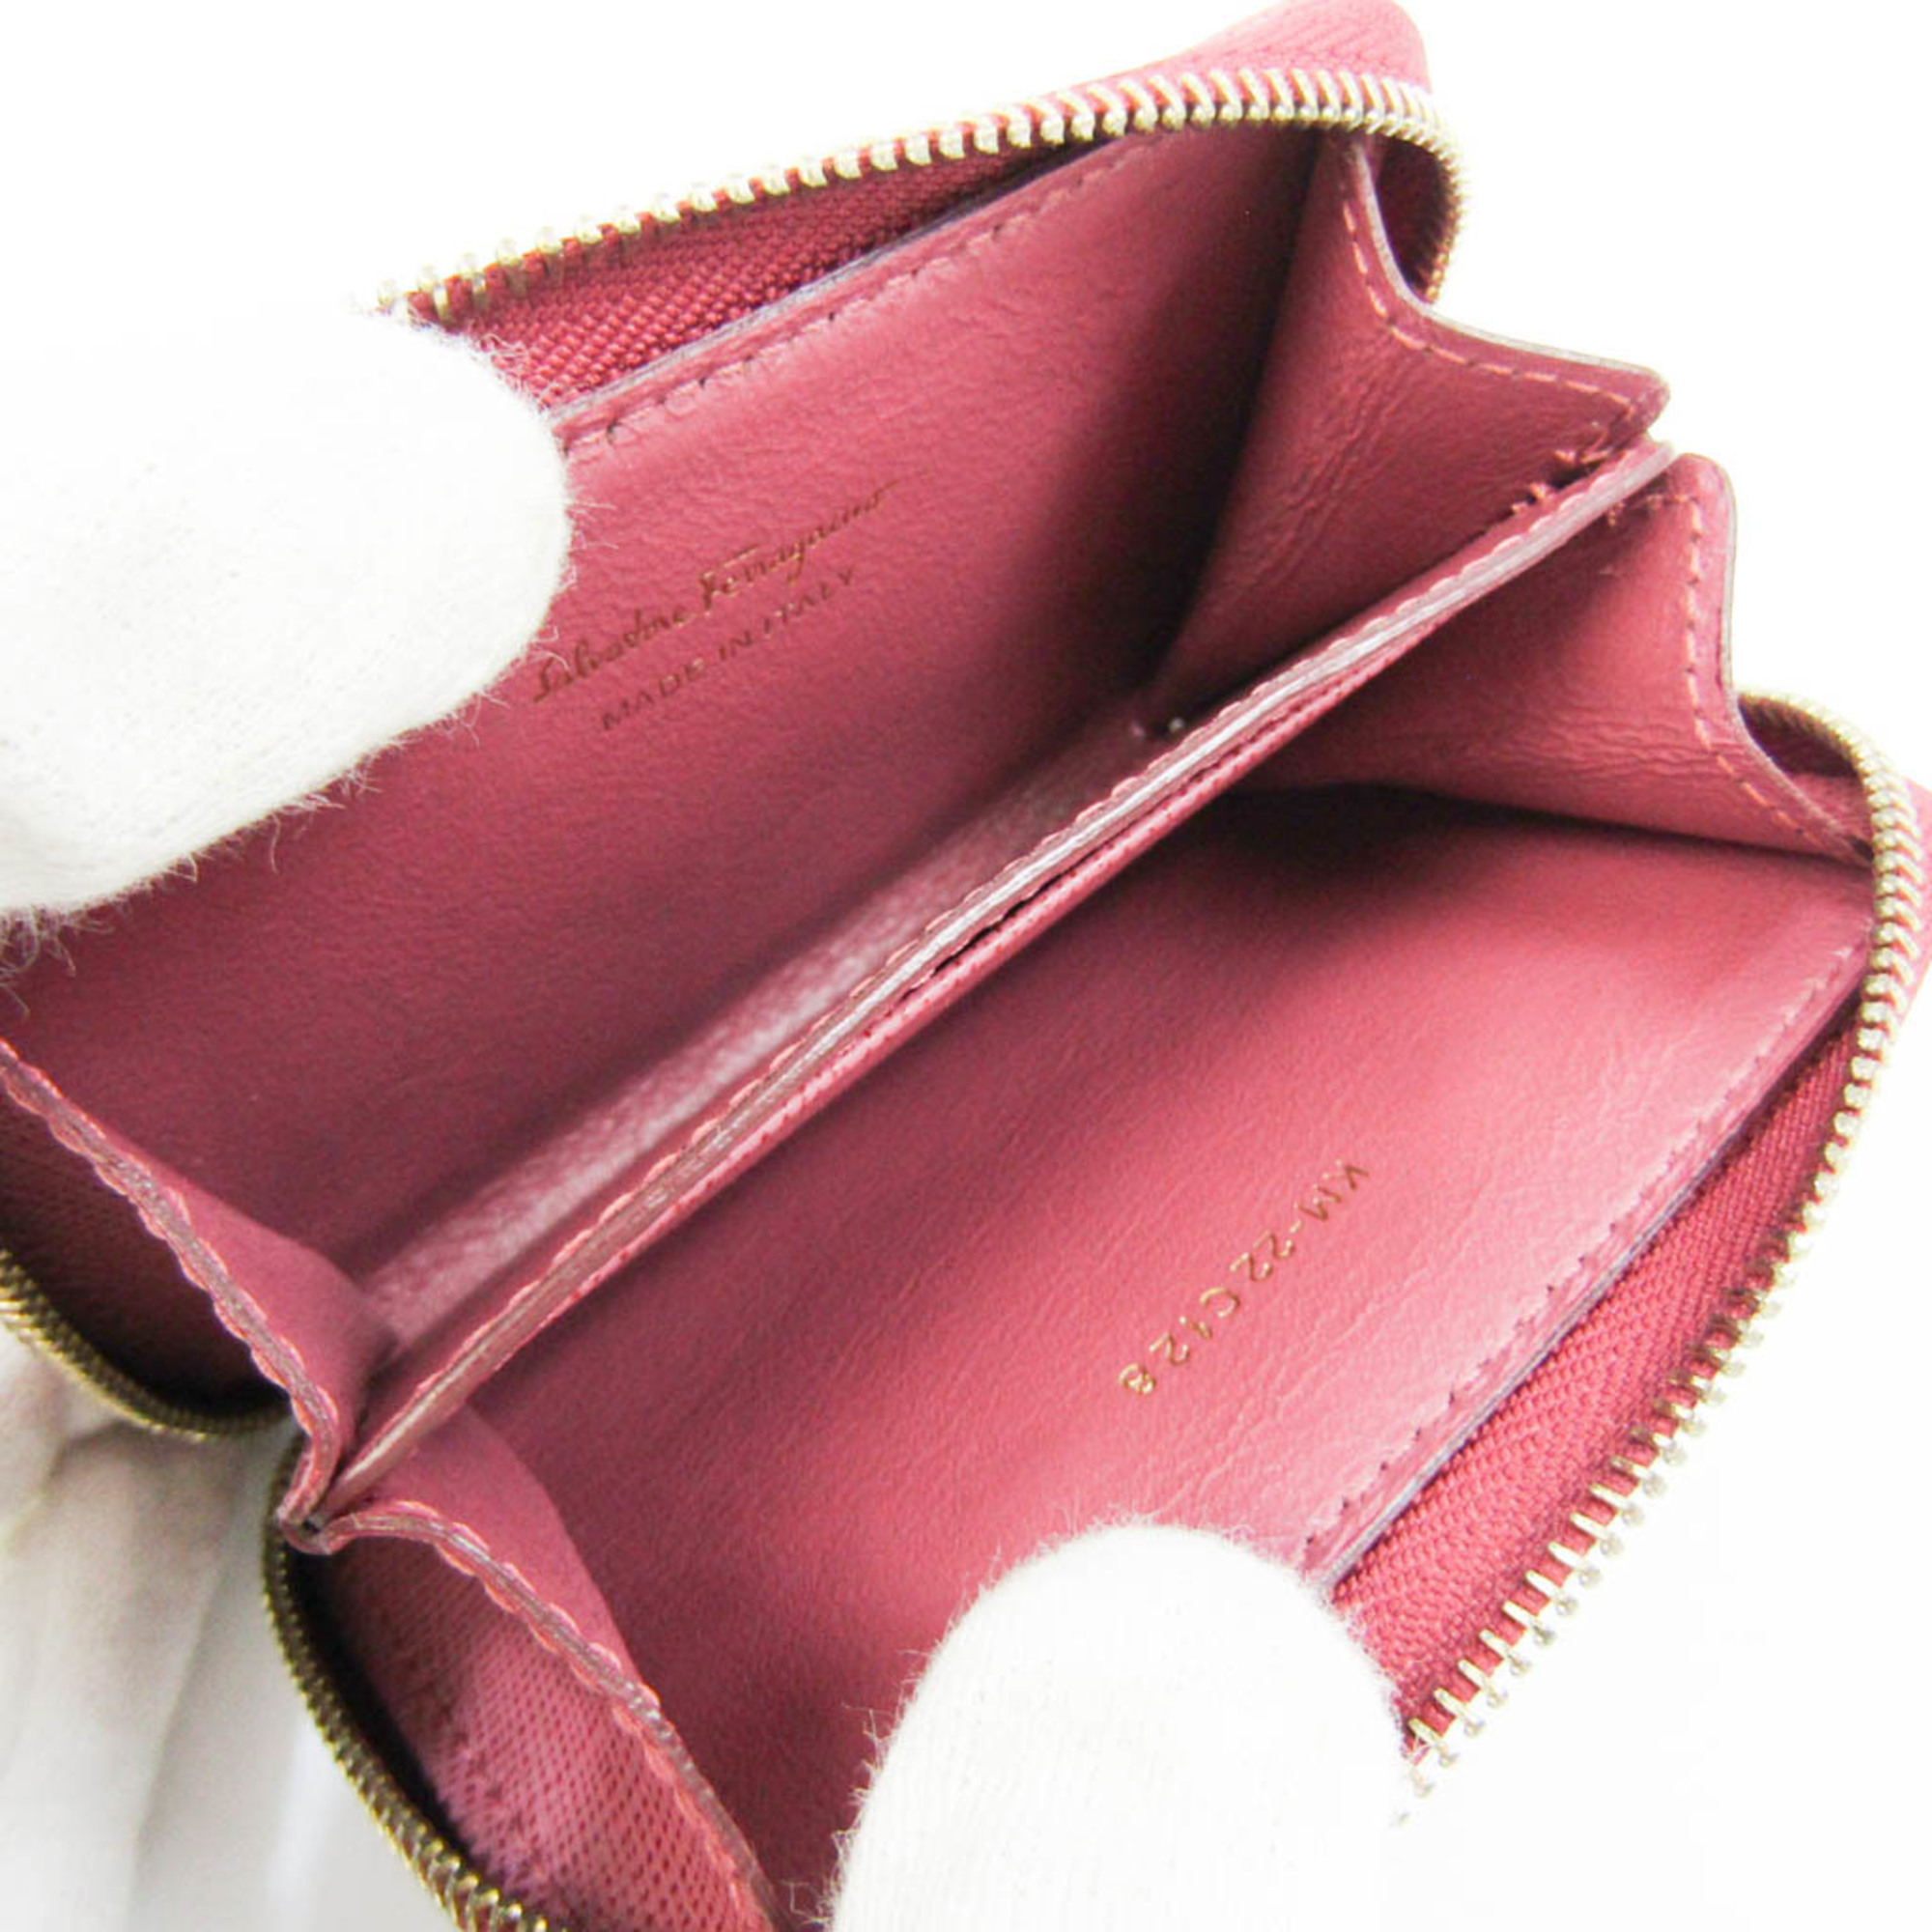 Salvatore Ferragamo Vara Ribbon KM-22 C128 Women's Leather Coin Purse/coin Case Pink